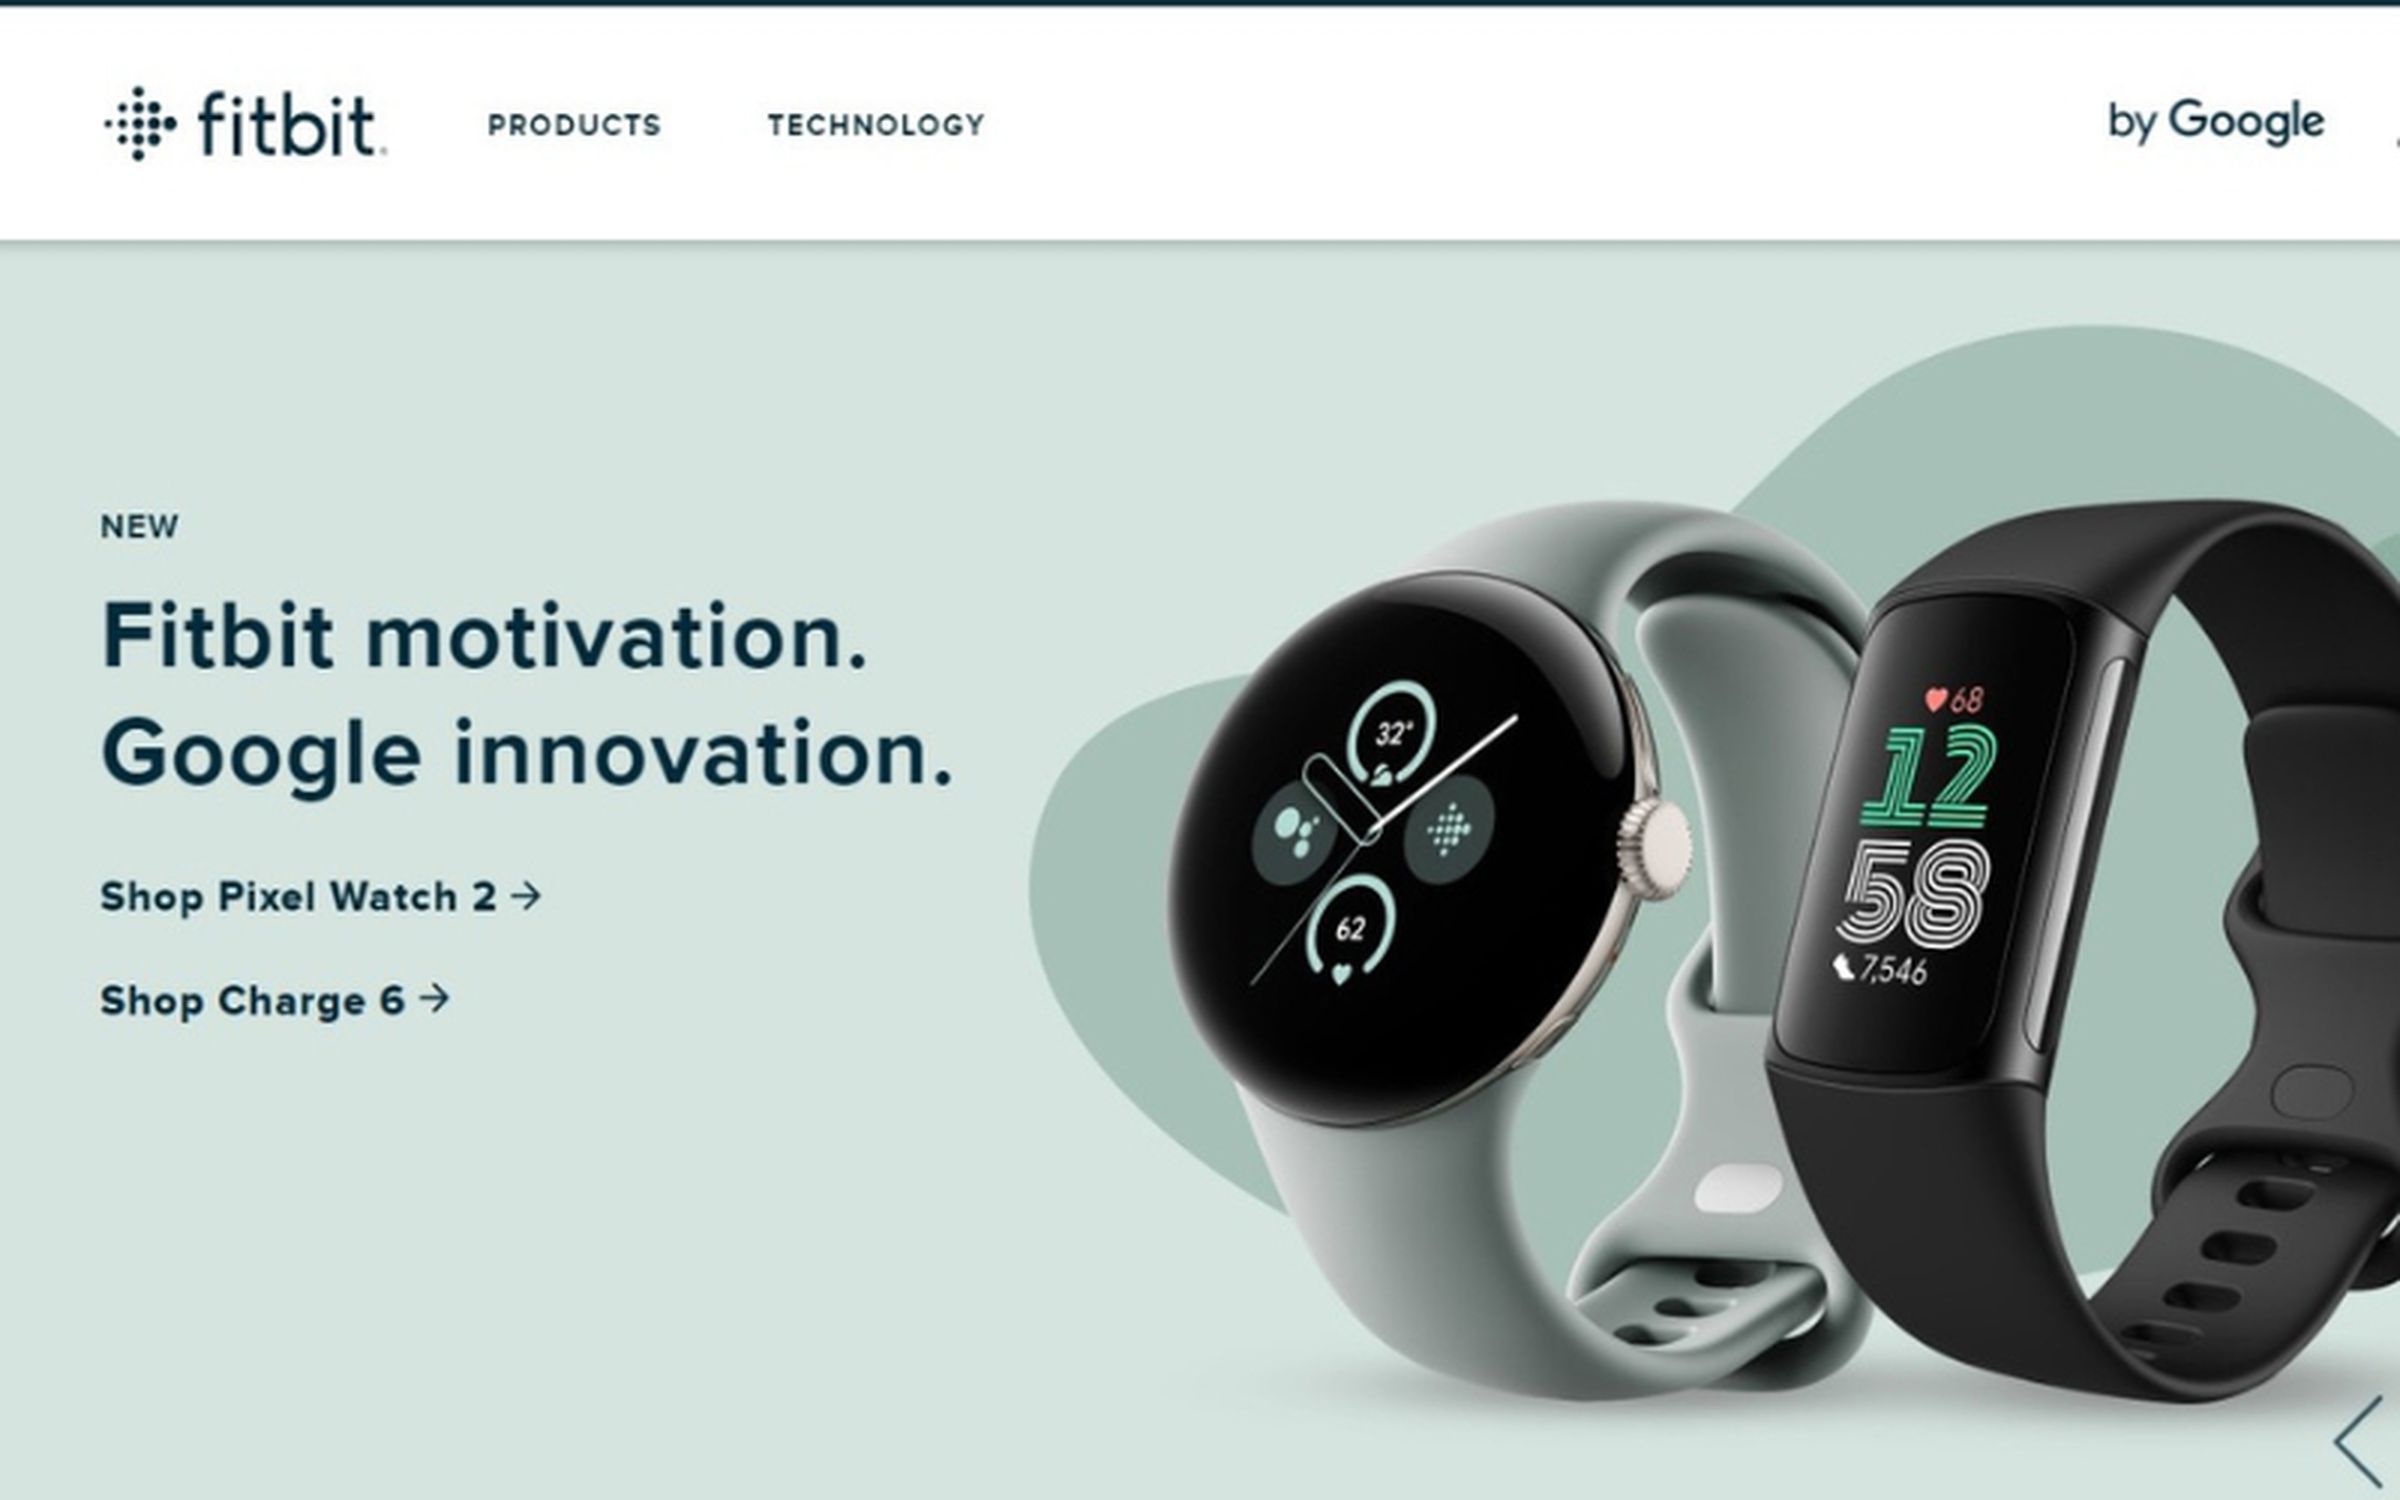 A screenshot taken of the Fitbit website showing older branding.